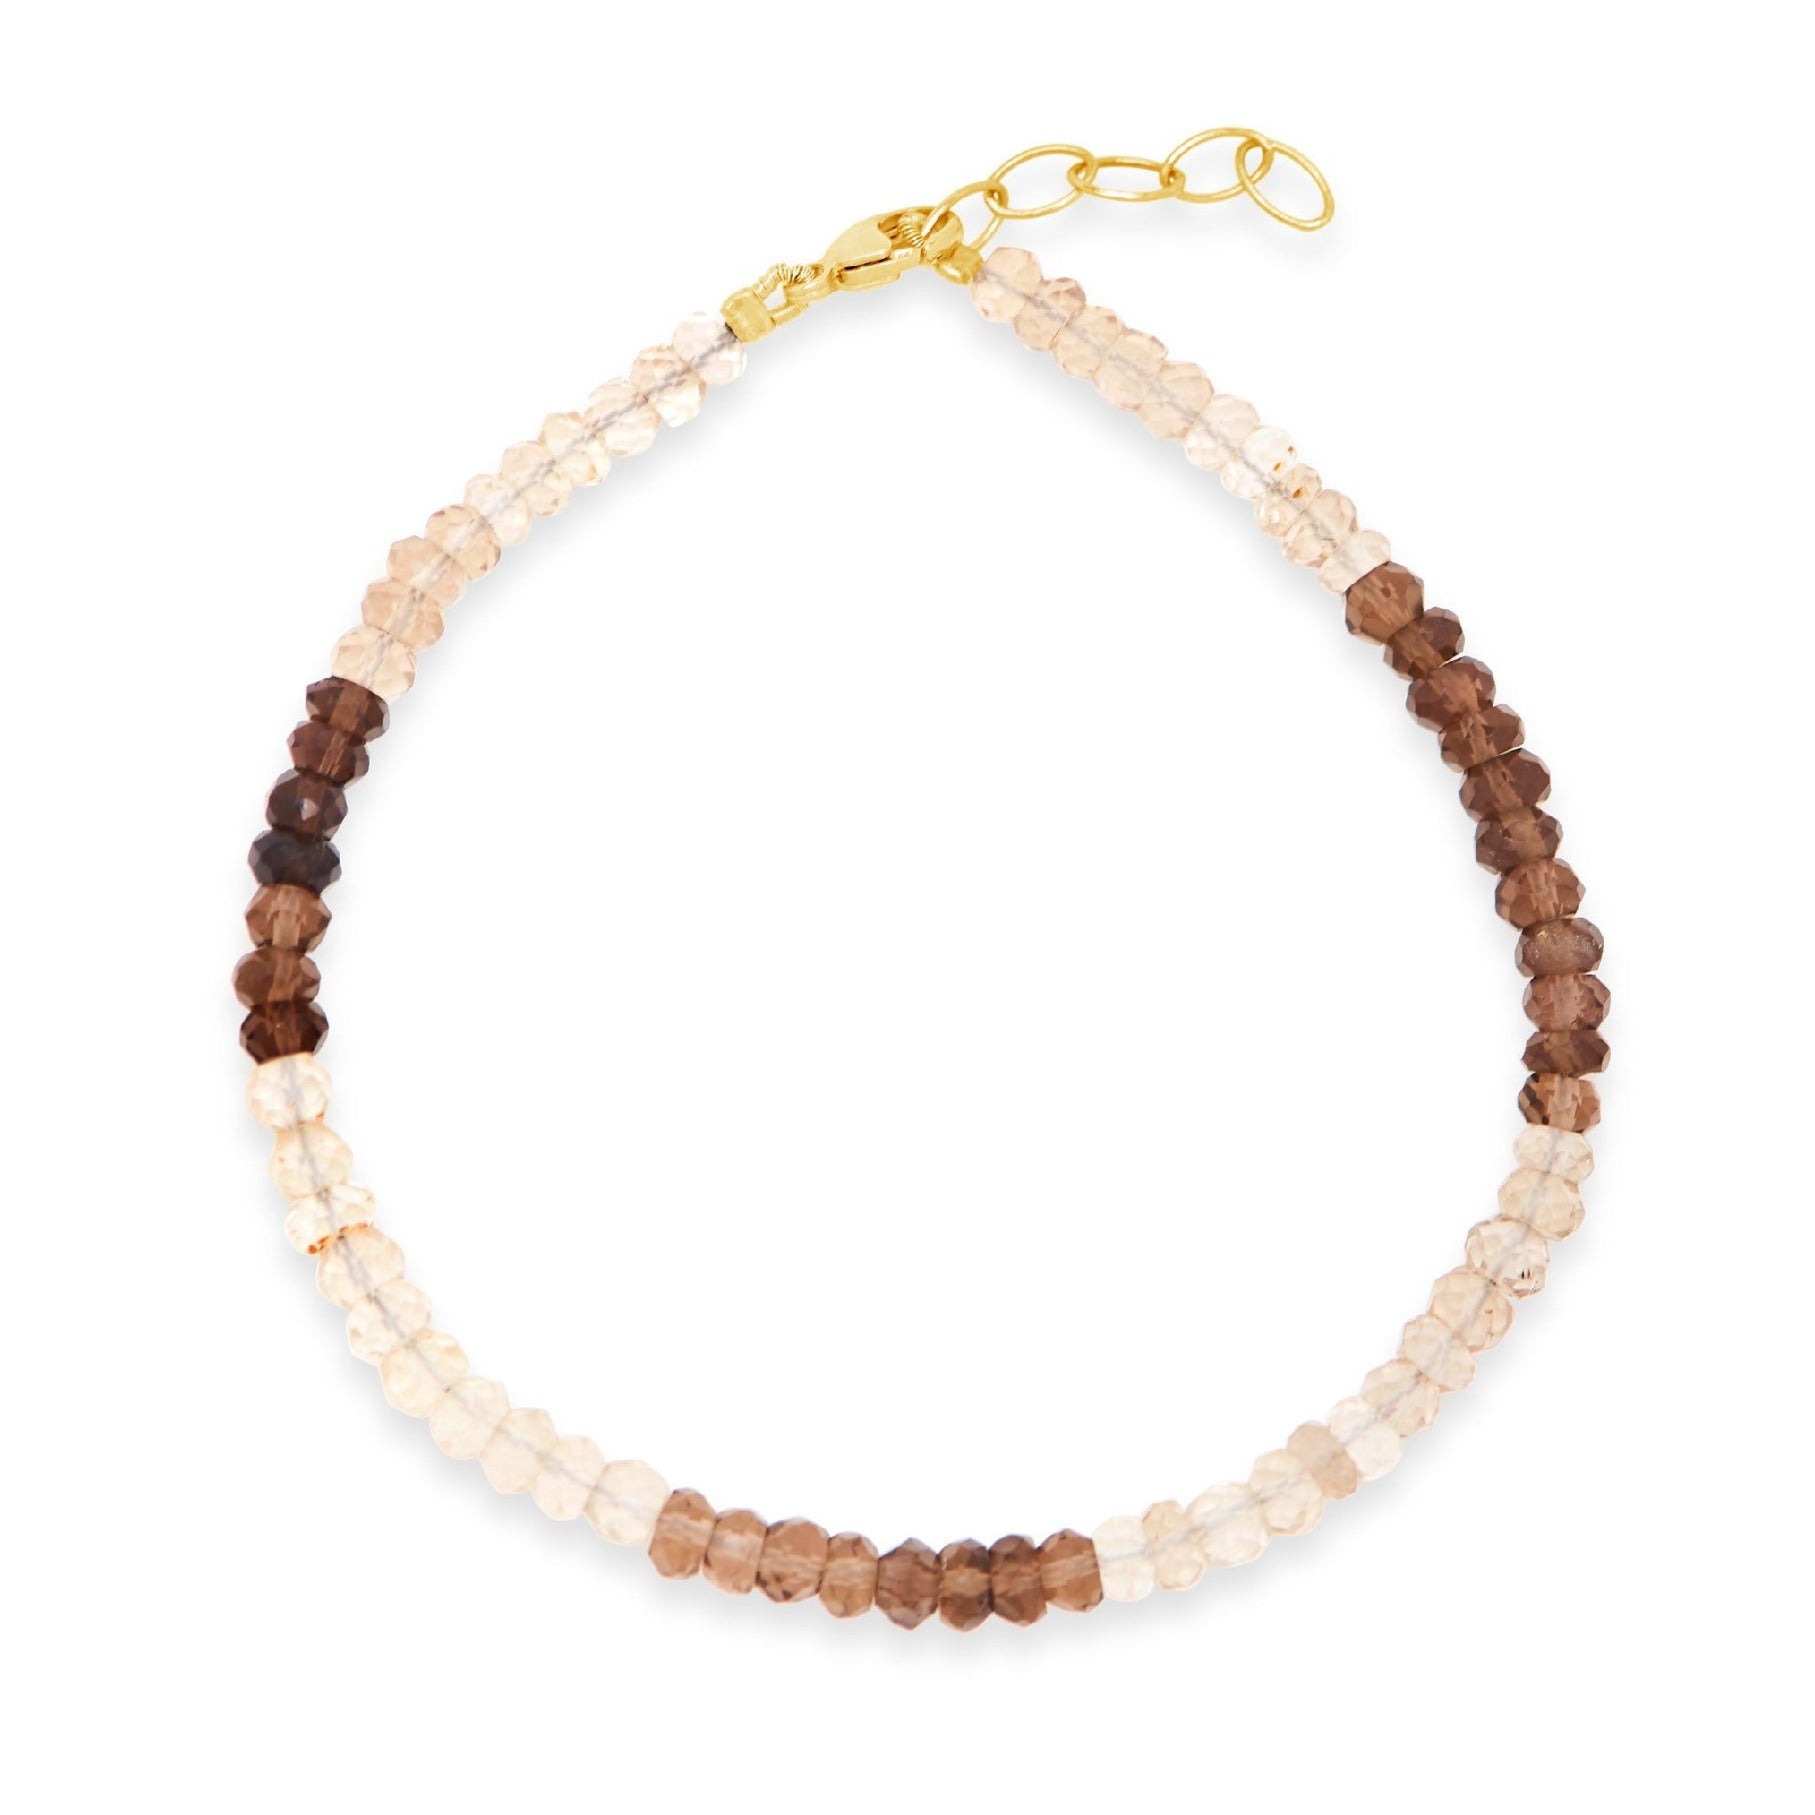 ON SALE - Natural Black Smoky Quartz Faceted Round Beads Bracelet